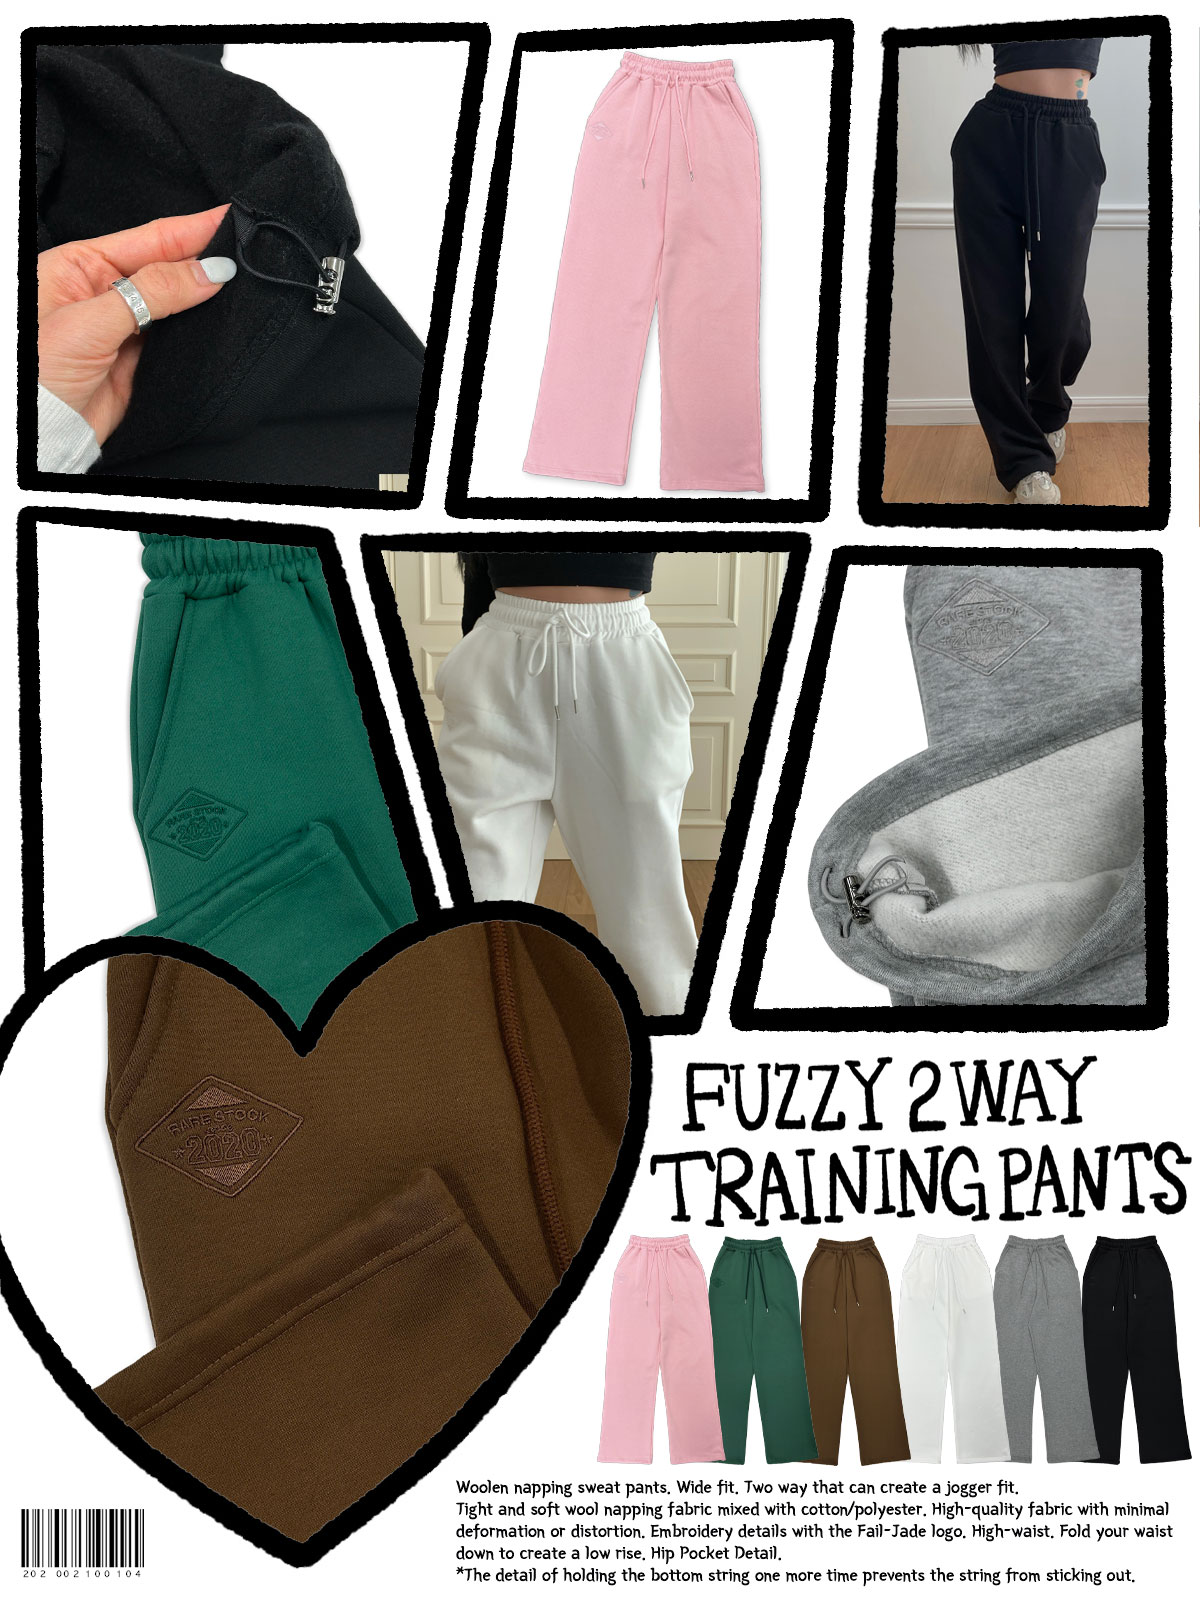 Fuzzy 2way Training Pants